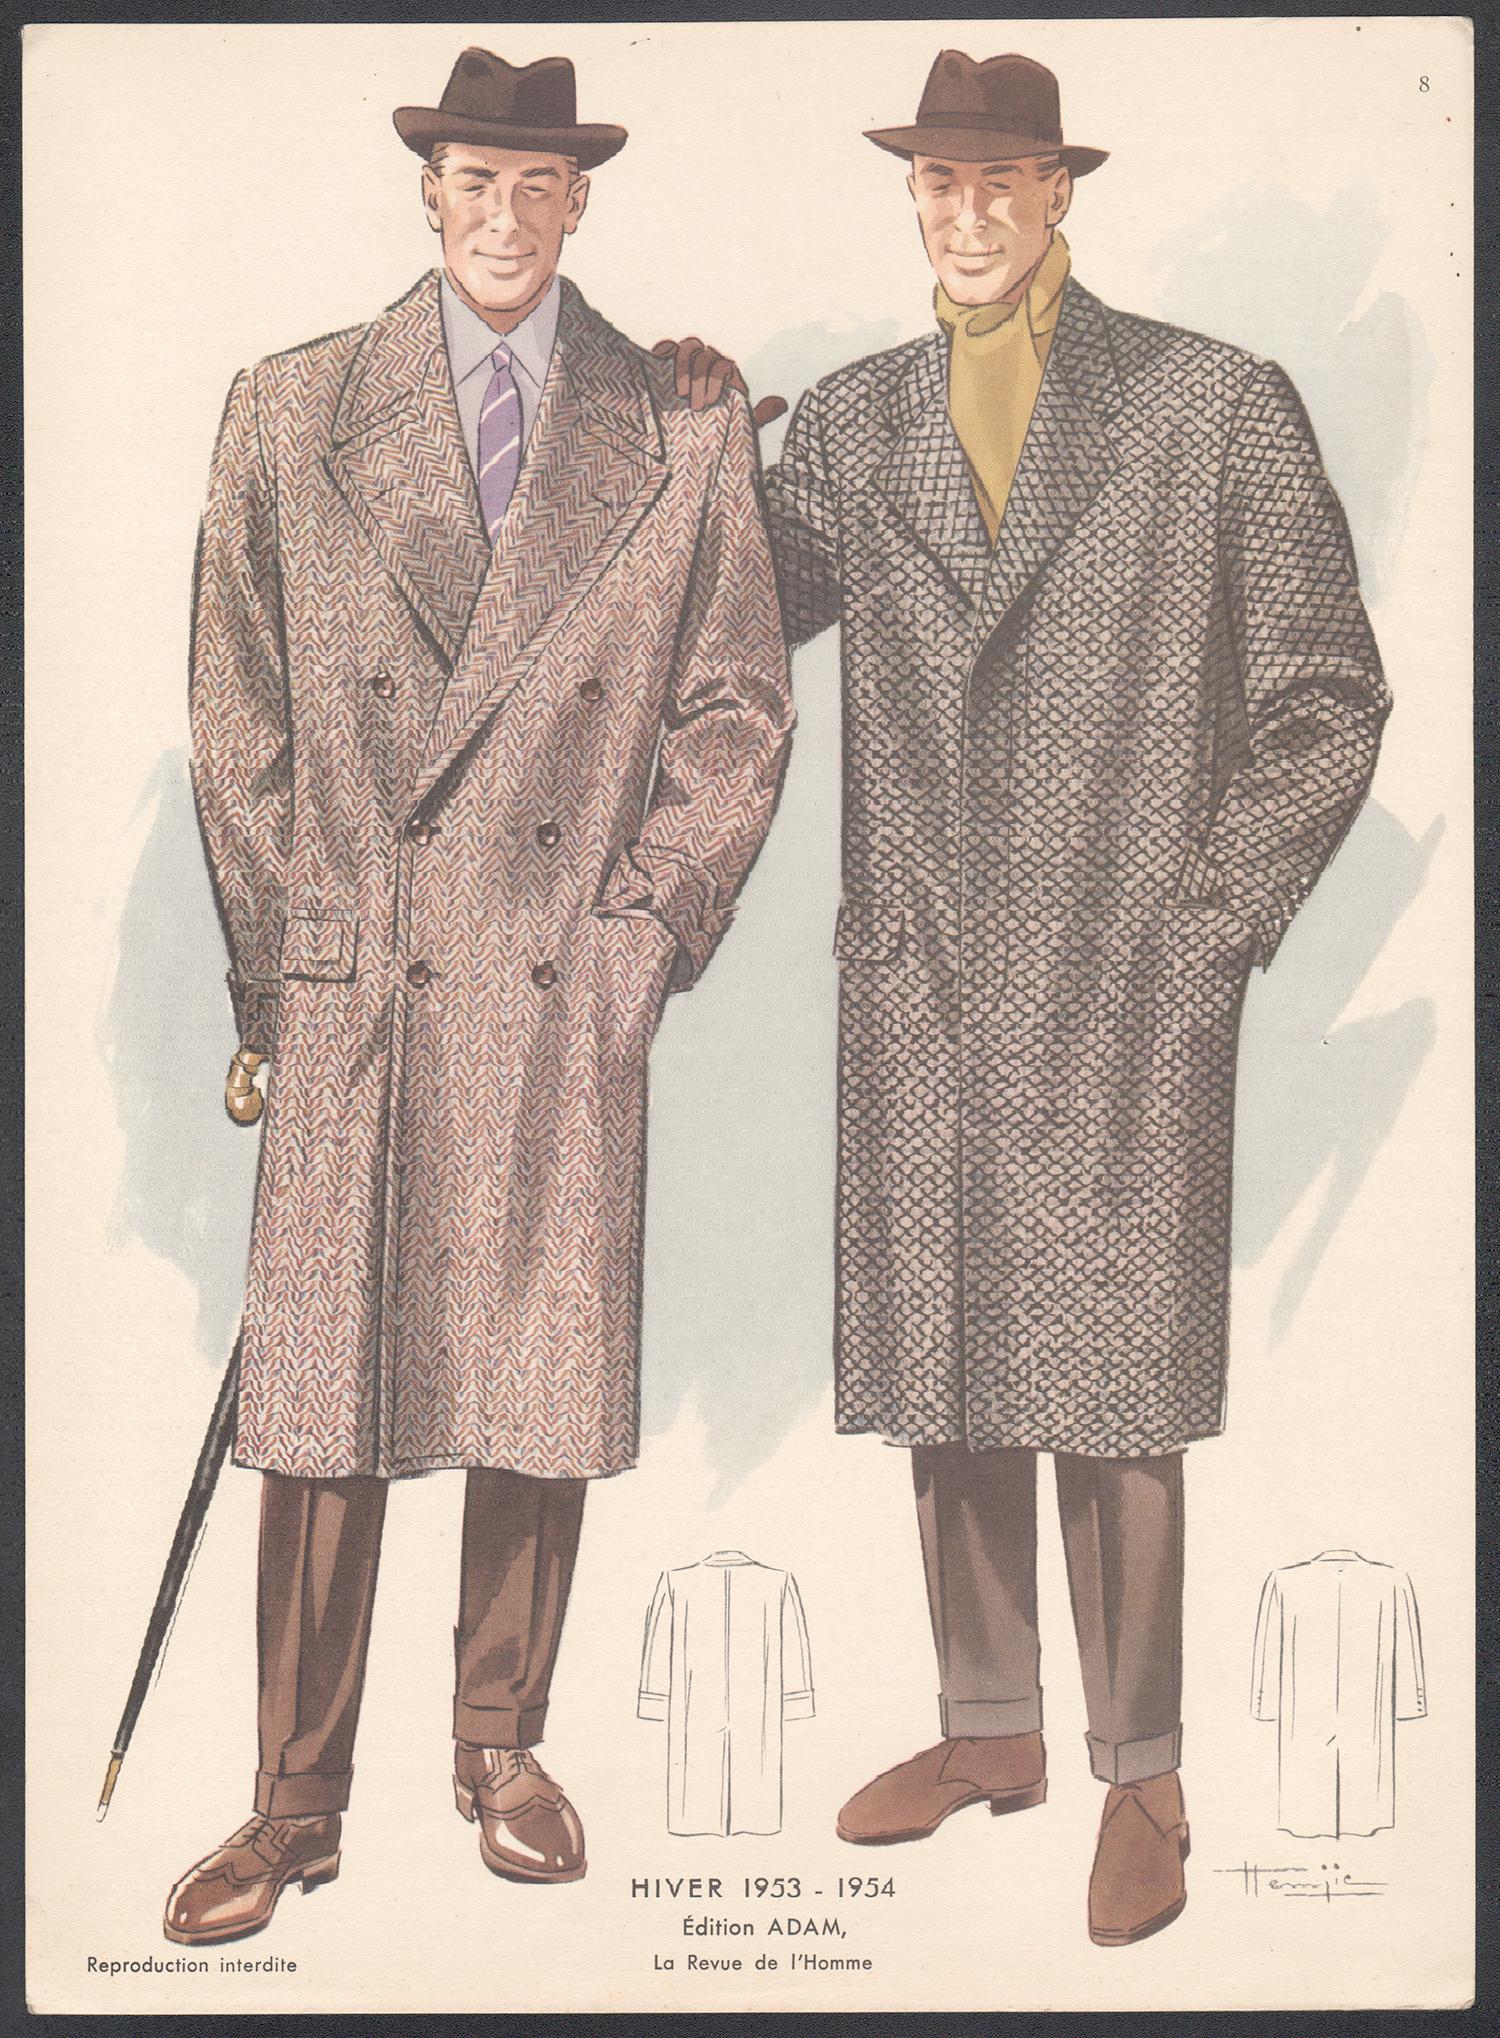 1950 male fashion